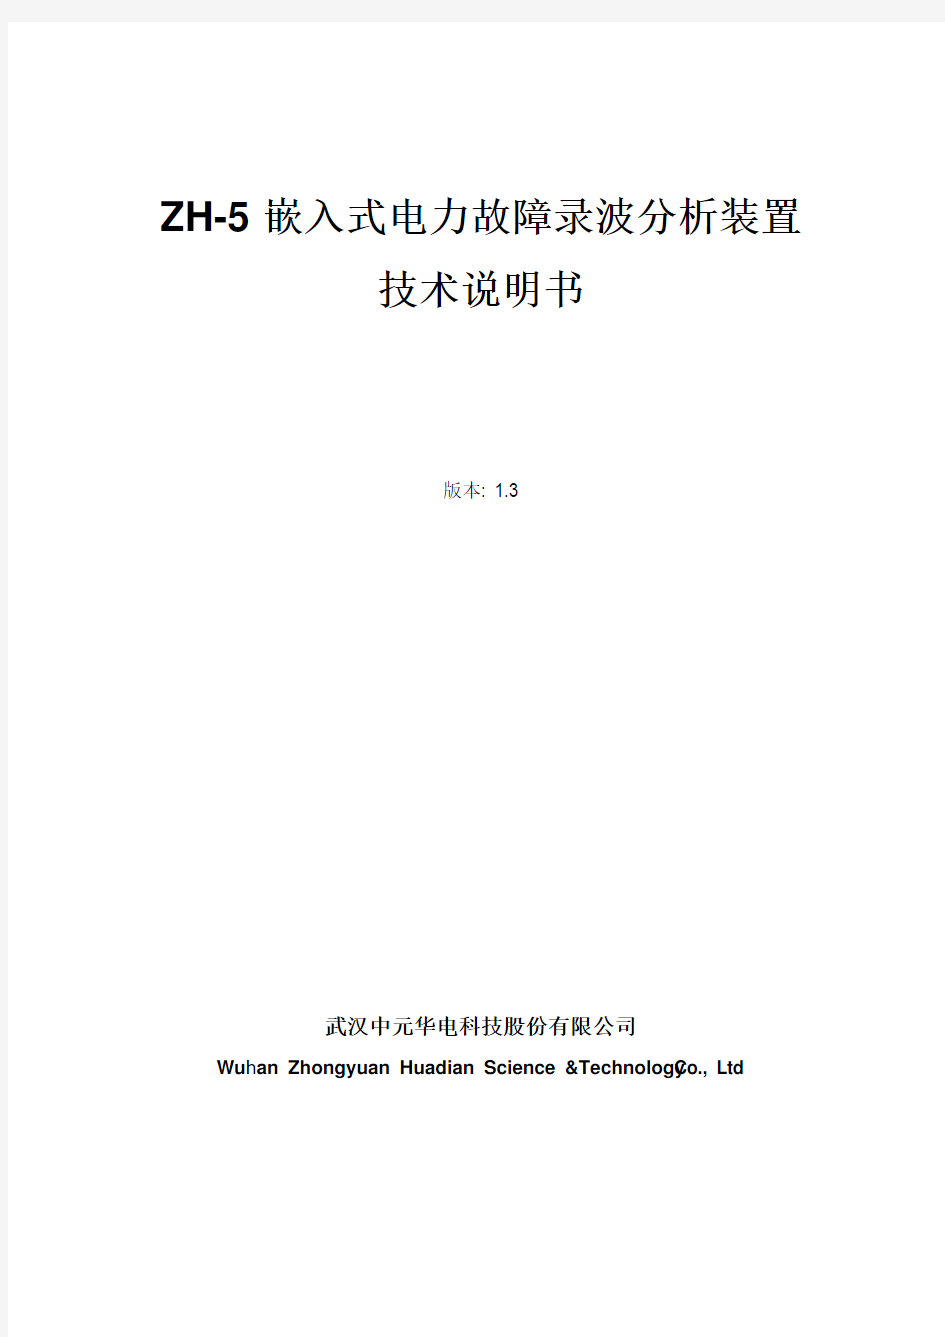 ZH-5技术说明书